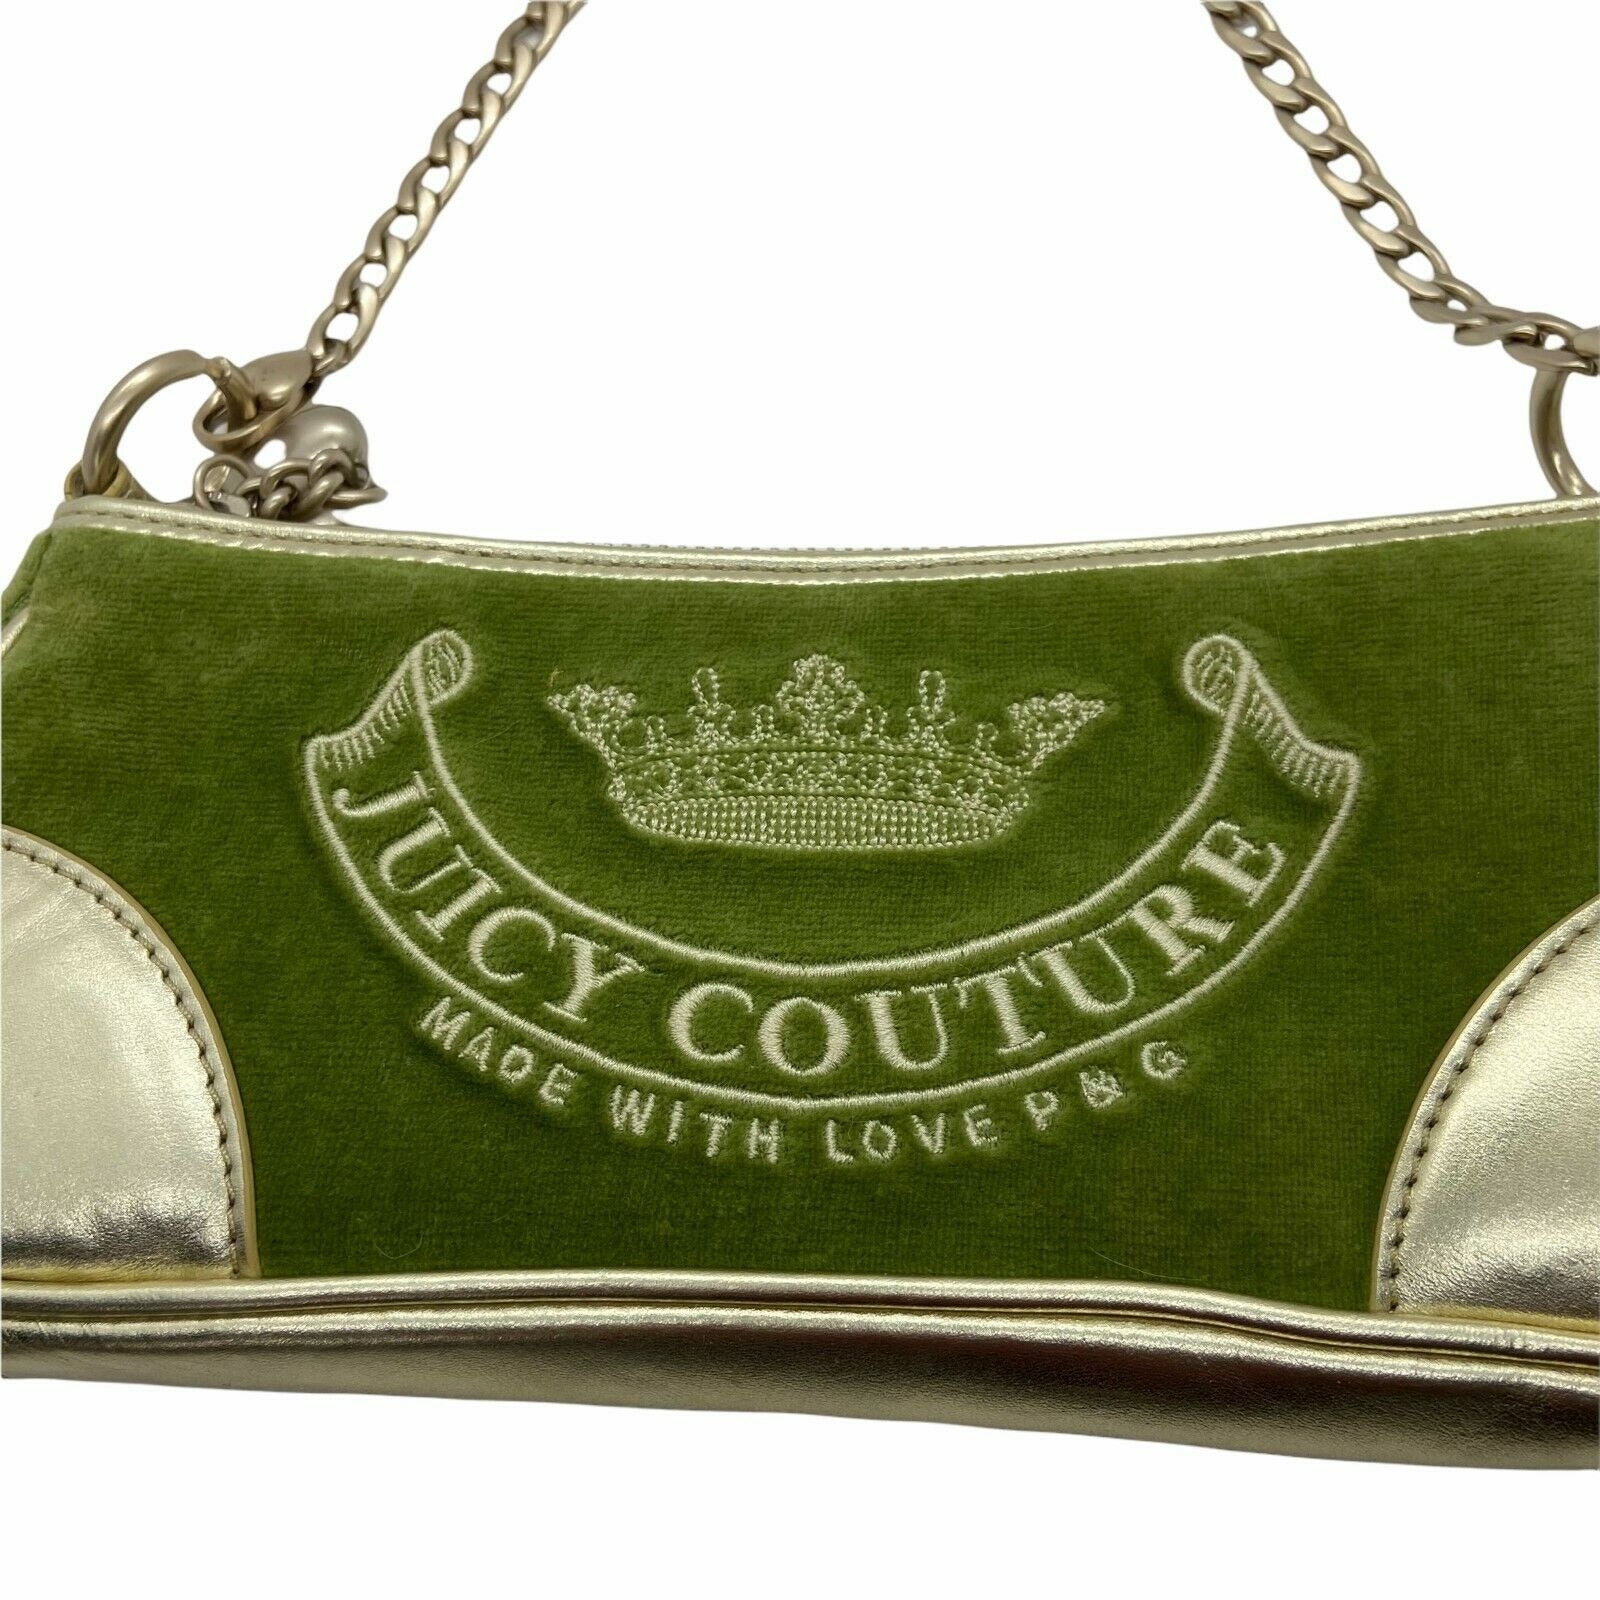 Vintage Y2K early 2000s baguette bag Juicy Couture velour green mini purse